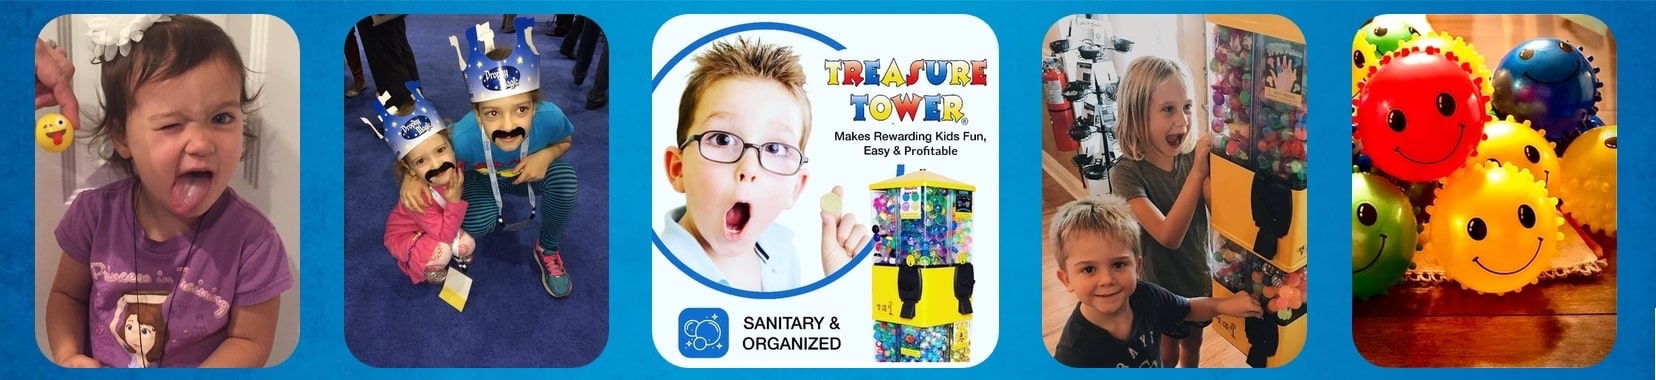 Treasure Tower Reward Program Sanitary and Organized